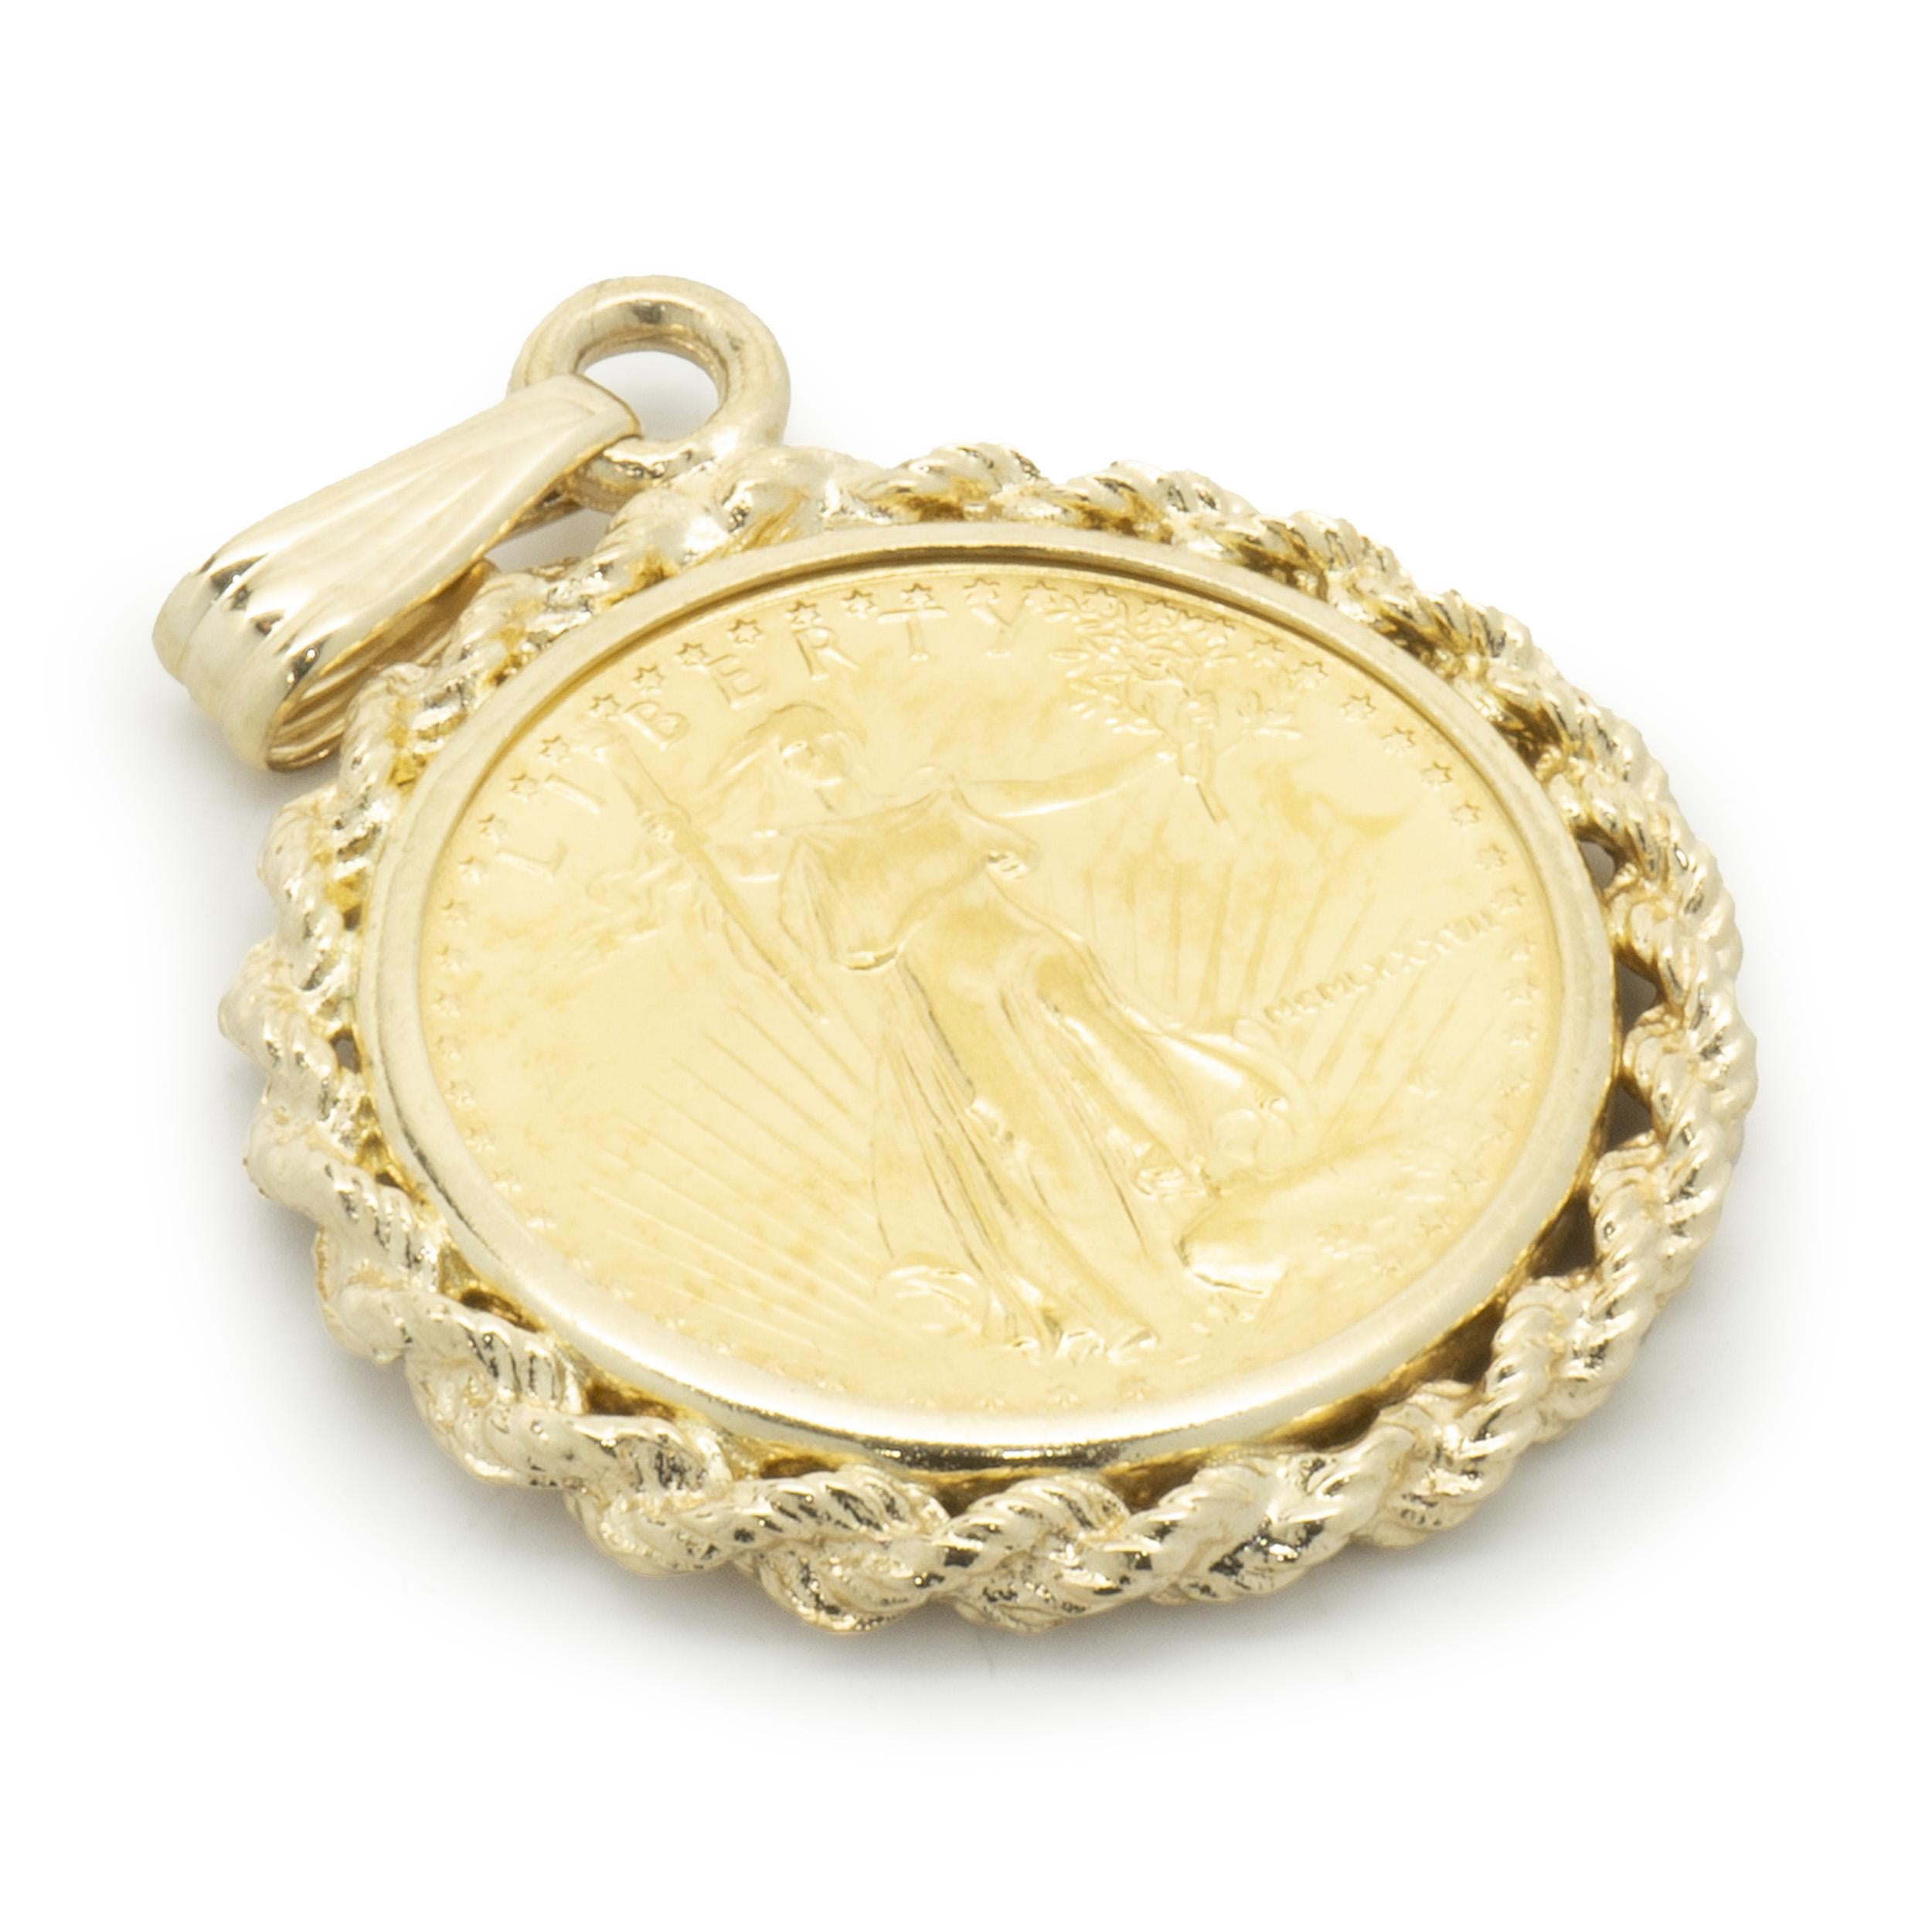 Designer: custom
Material: 14K yellow gold / liberty coin
Dimensions: pendant measures 31 x 21mm 
Weight: 5.15 grams